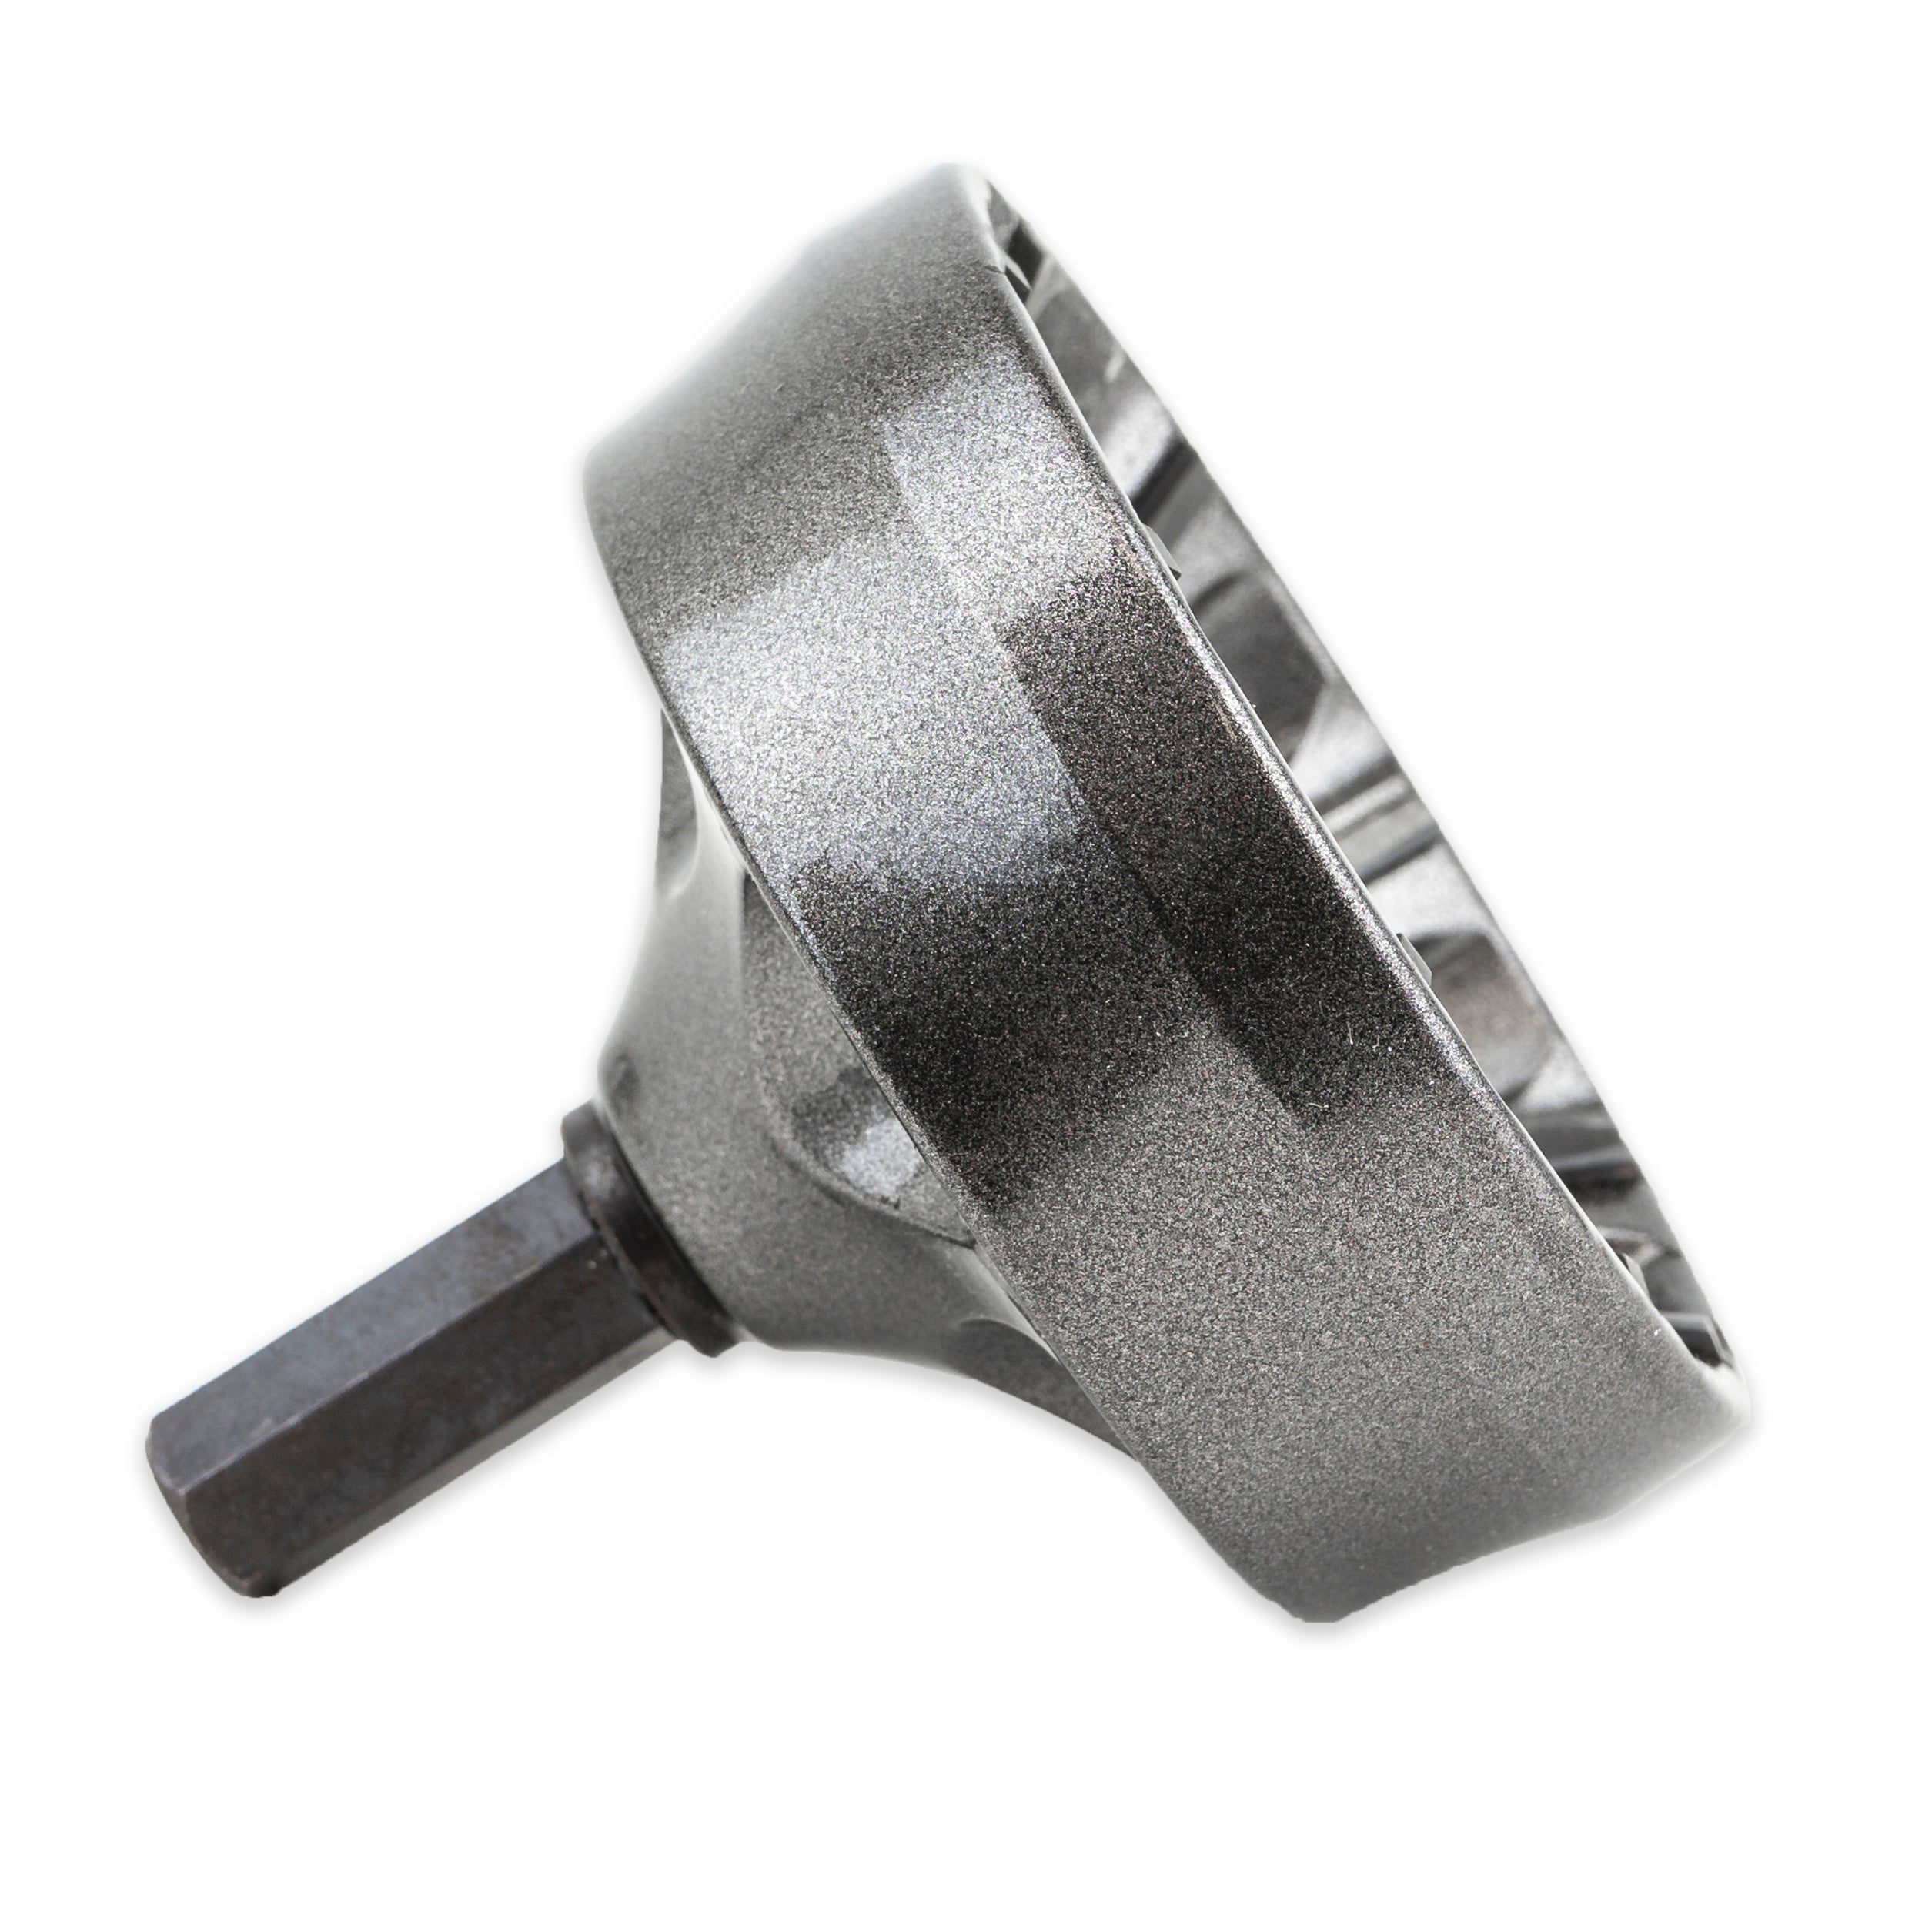 Drill Bit Deburring External Chamfer Tool Tungsten Steel Remove Burr for  Repair Bolt Thread Drilling Tools Drop Shipping 드릴비트 - AliExpress